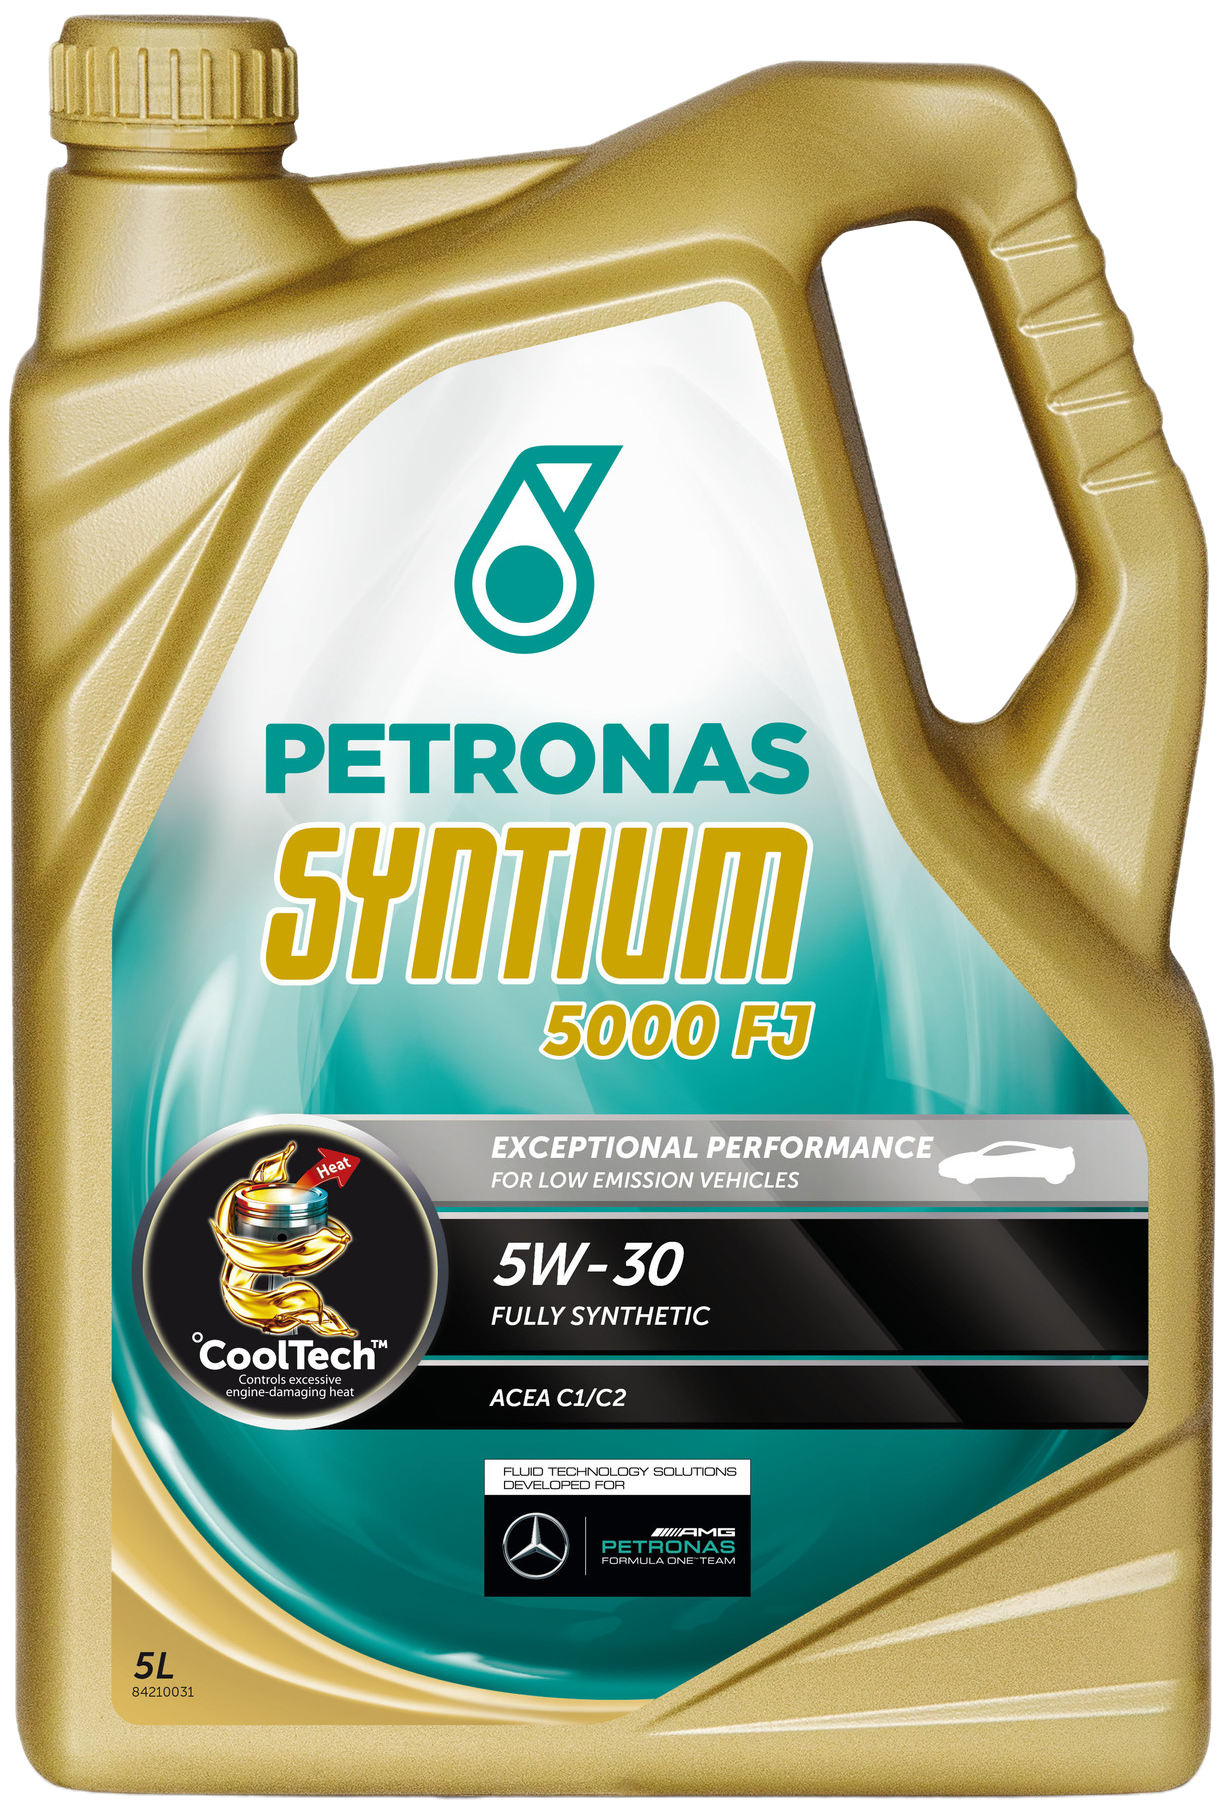 Petronas Syntium 5000 FJ 5W-30, 5 lt